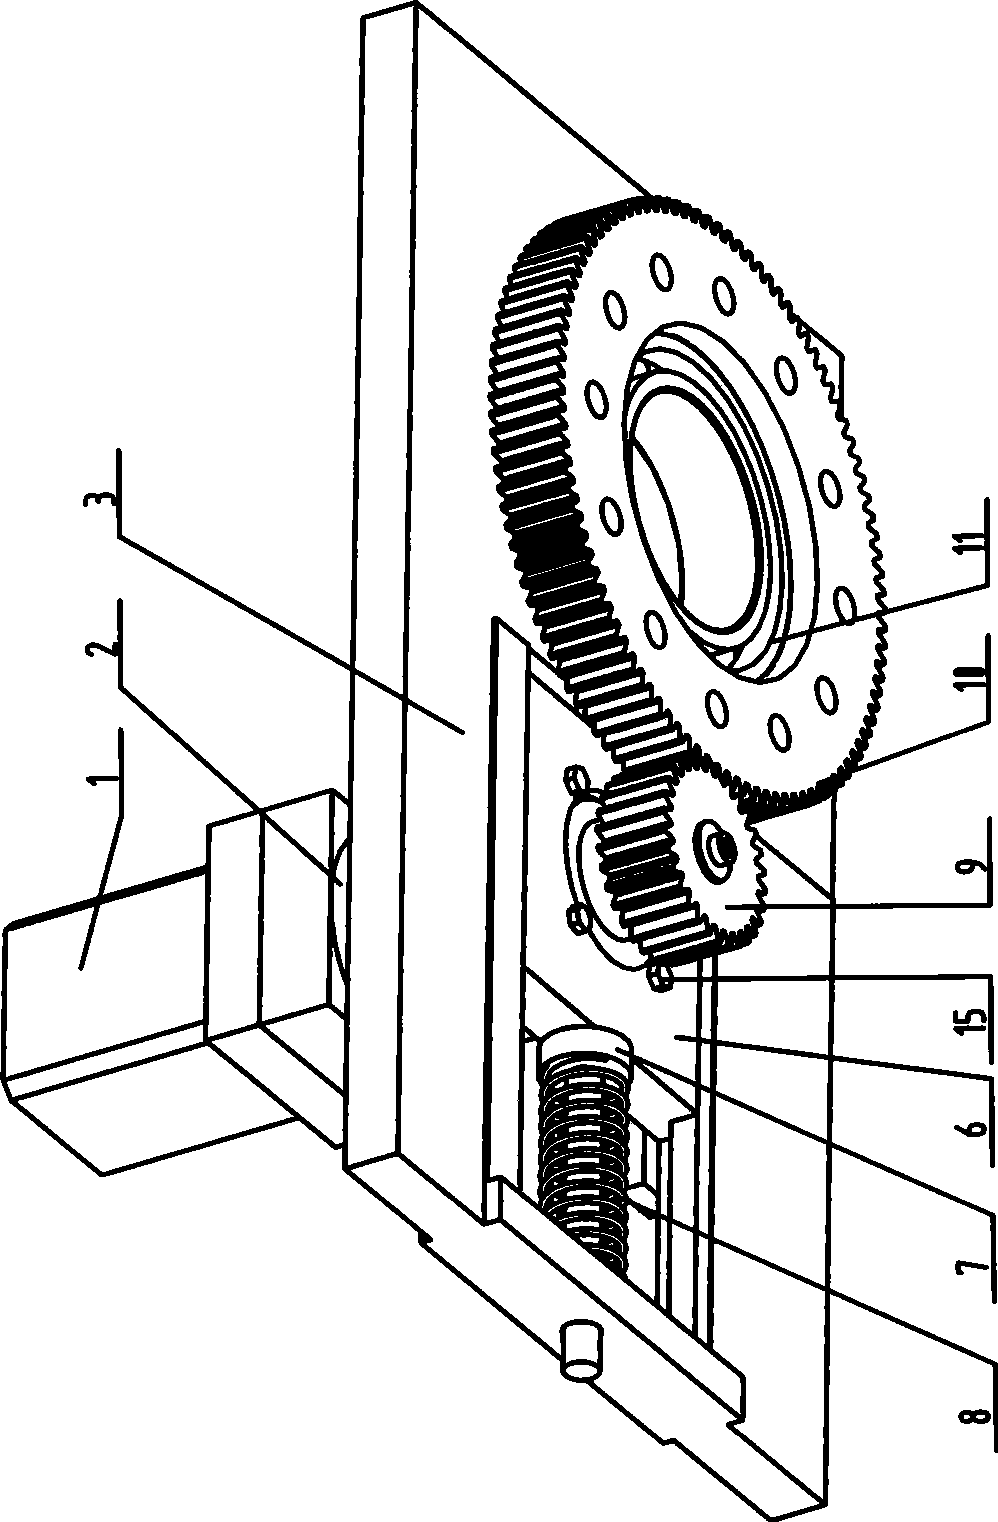 Sliding frame mechanism capable of reducing transmission idling of gears